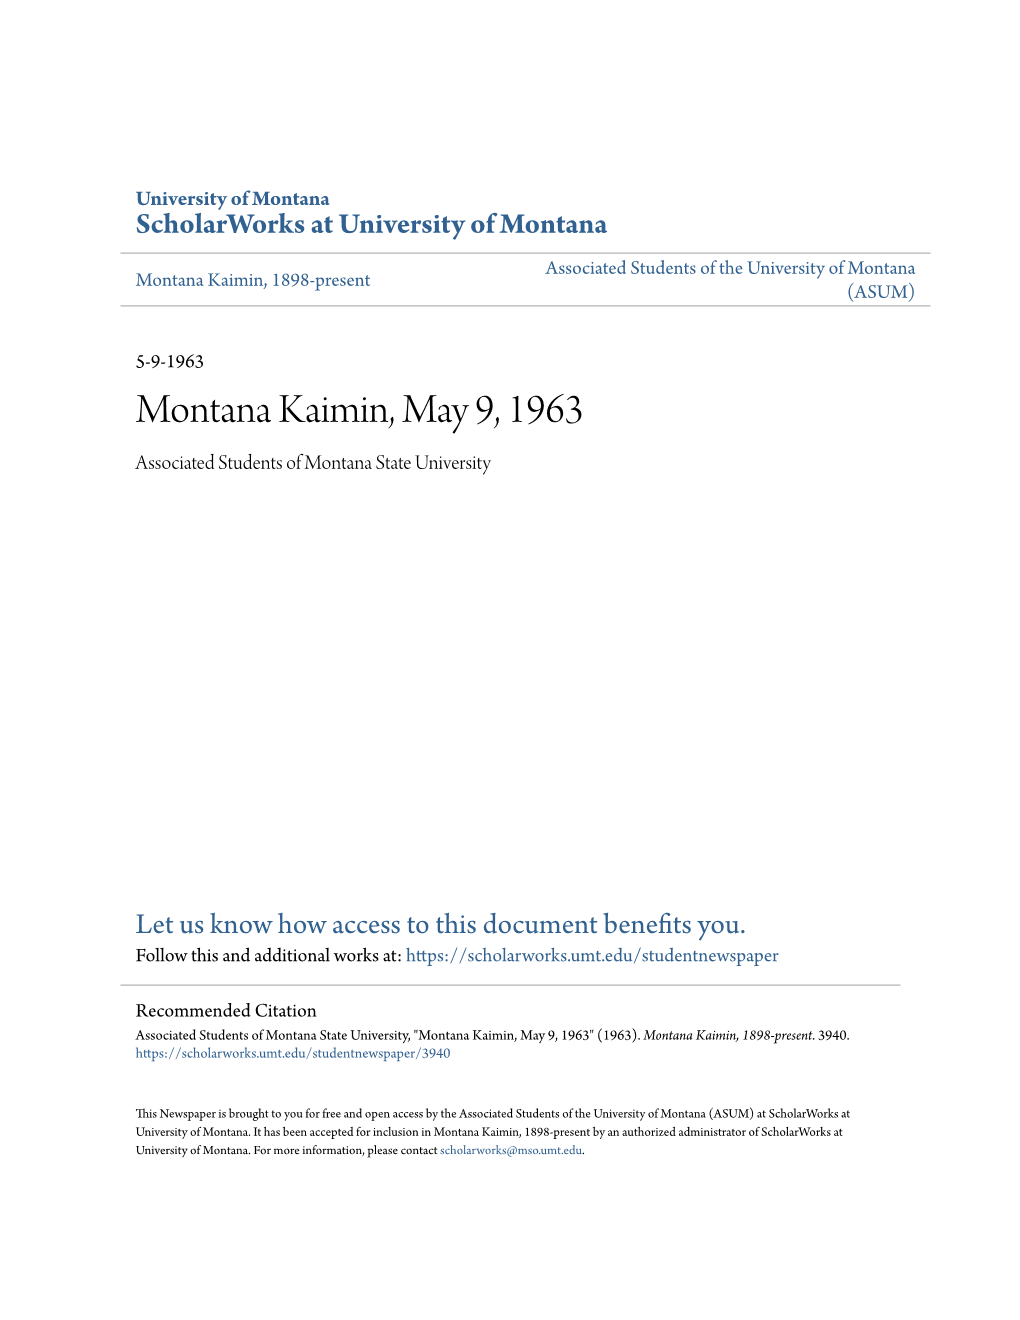 Montana Kaimin, May 9, 1963 Associated Students of Montana State University